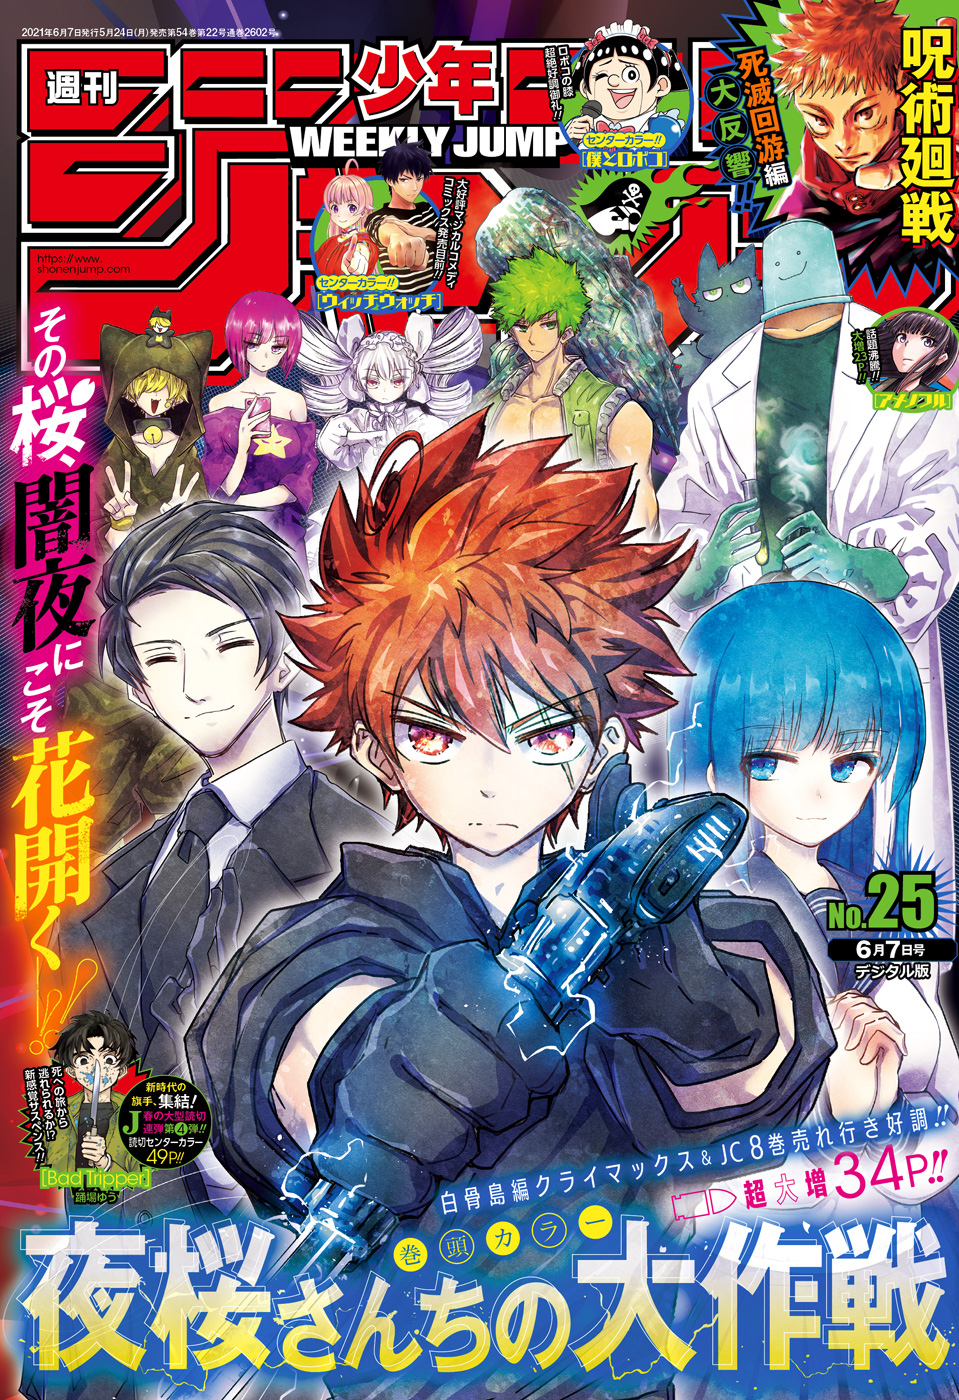 Weekly Shonen Jump Issue 25, 2021 | Jump Database | Fandom